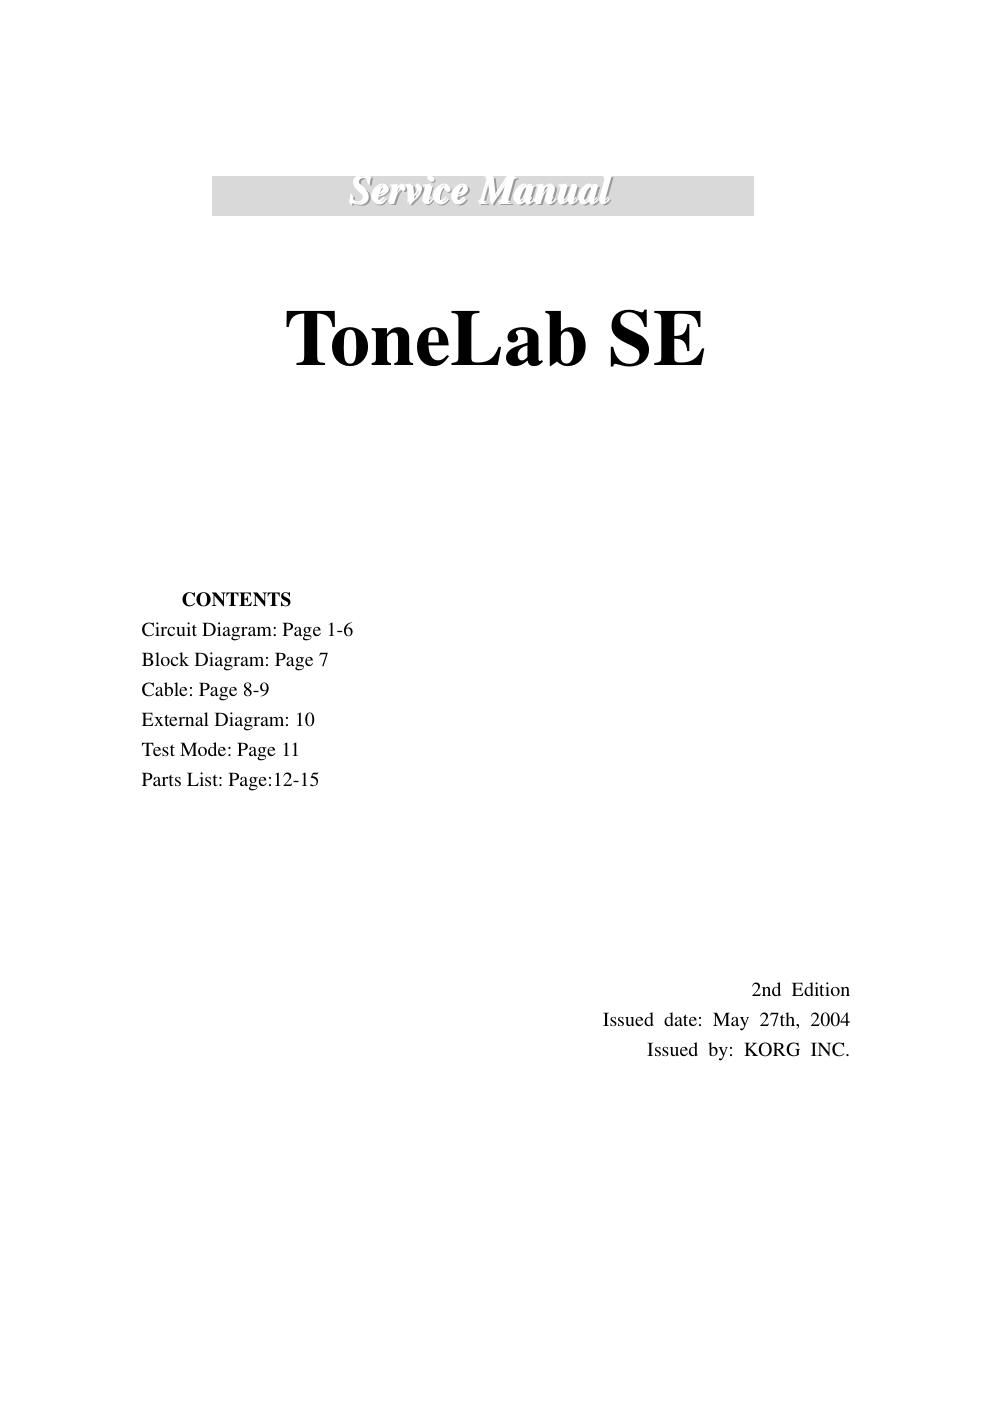 vox tone lab se service manual